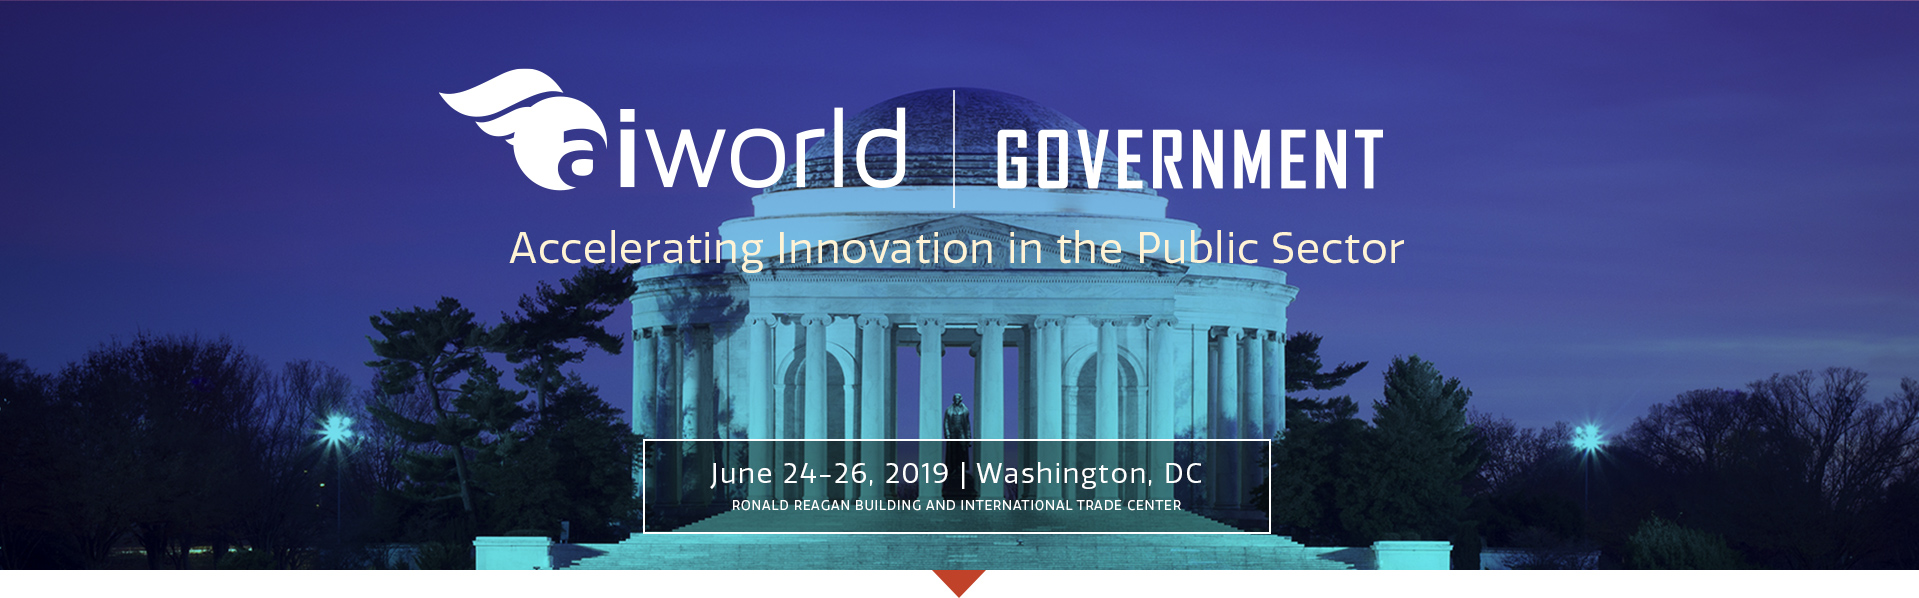 Boston Global Forum – Michael Dukakis Institute and the Strategic Alliance AI World will organize the AI World Government Conference & Expo 2019